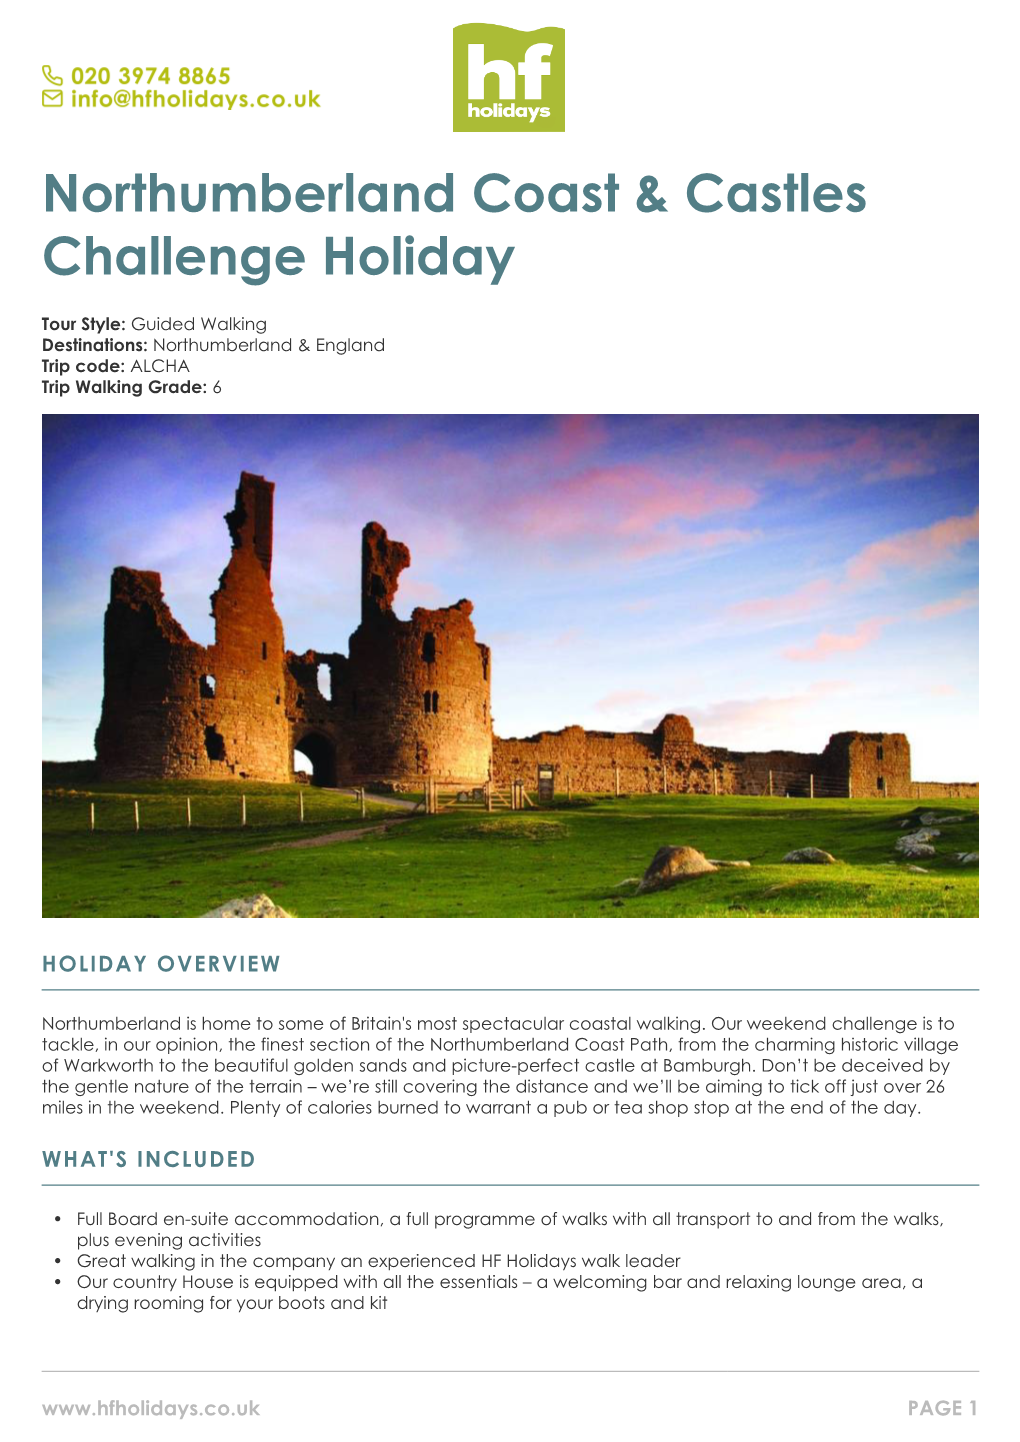 Northumberland Coast & Castles Challenge Holiday